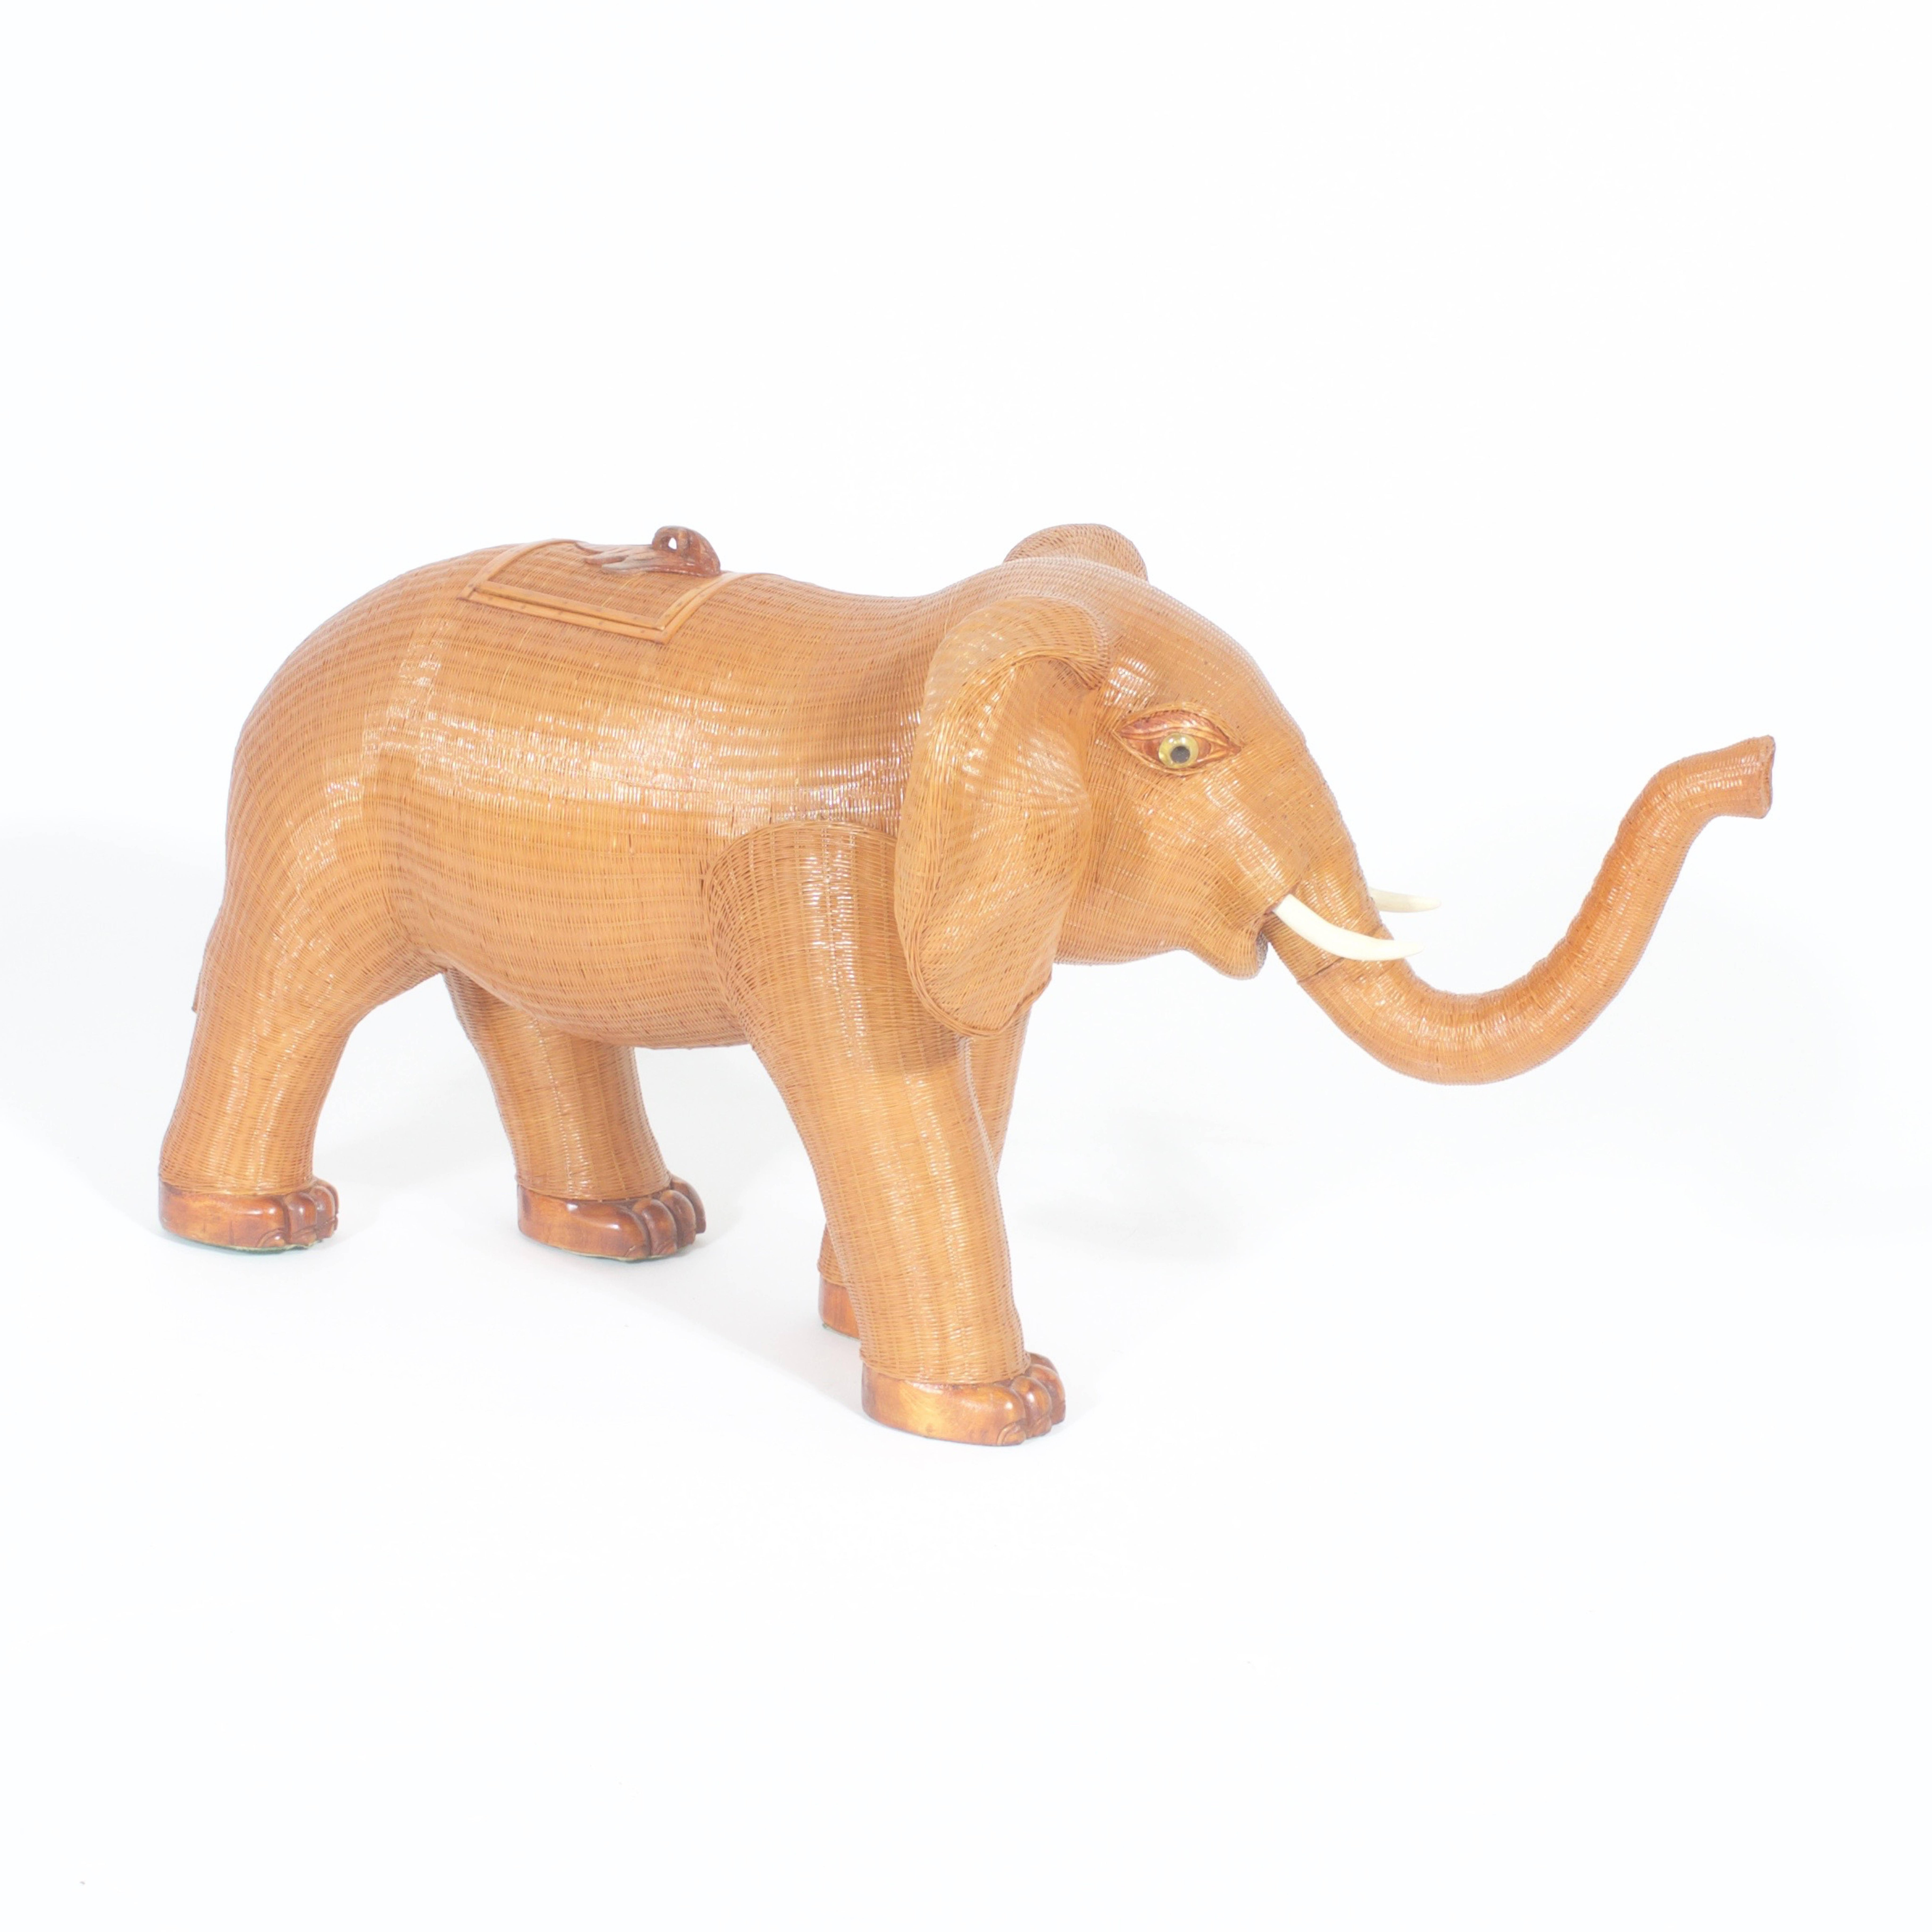 Folk Art Wicker Elephant Box